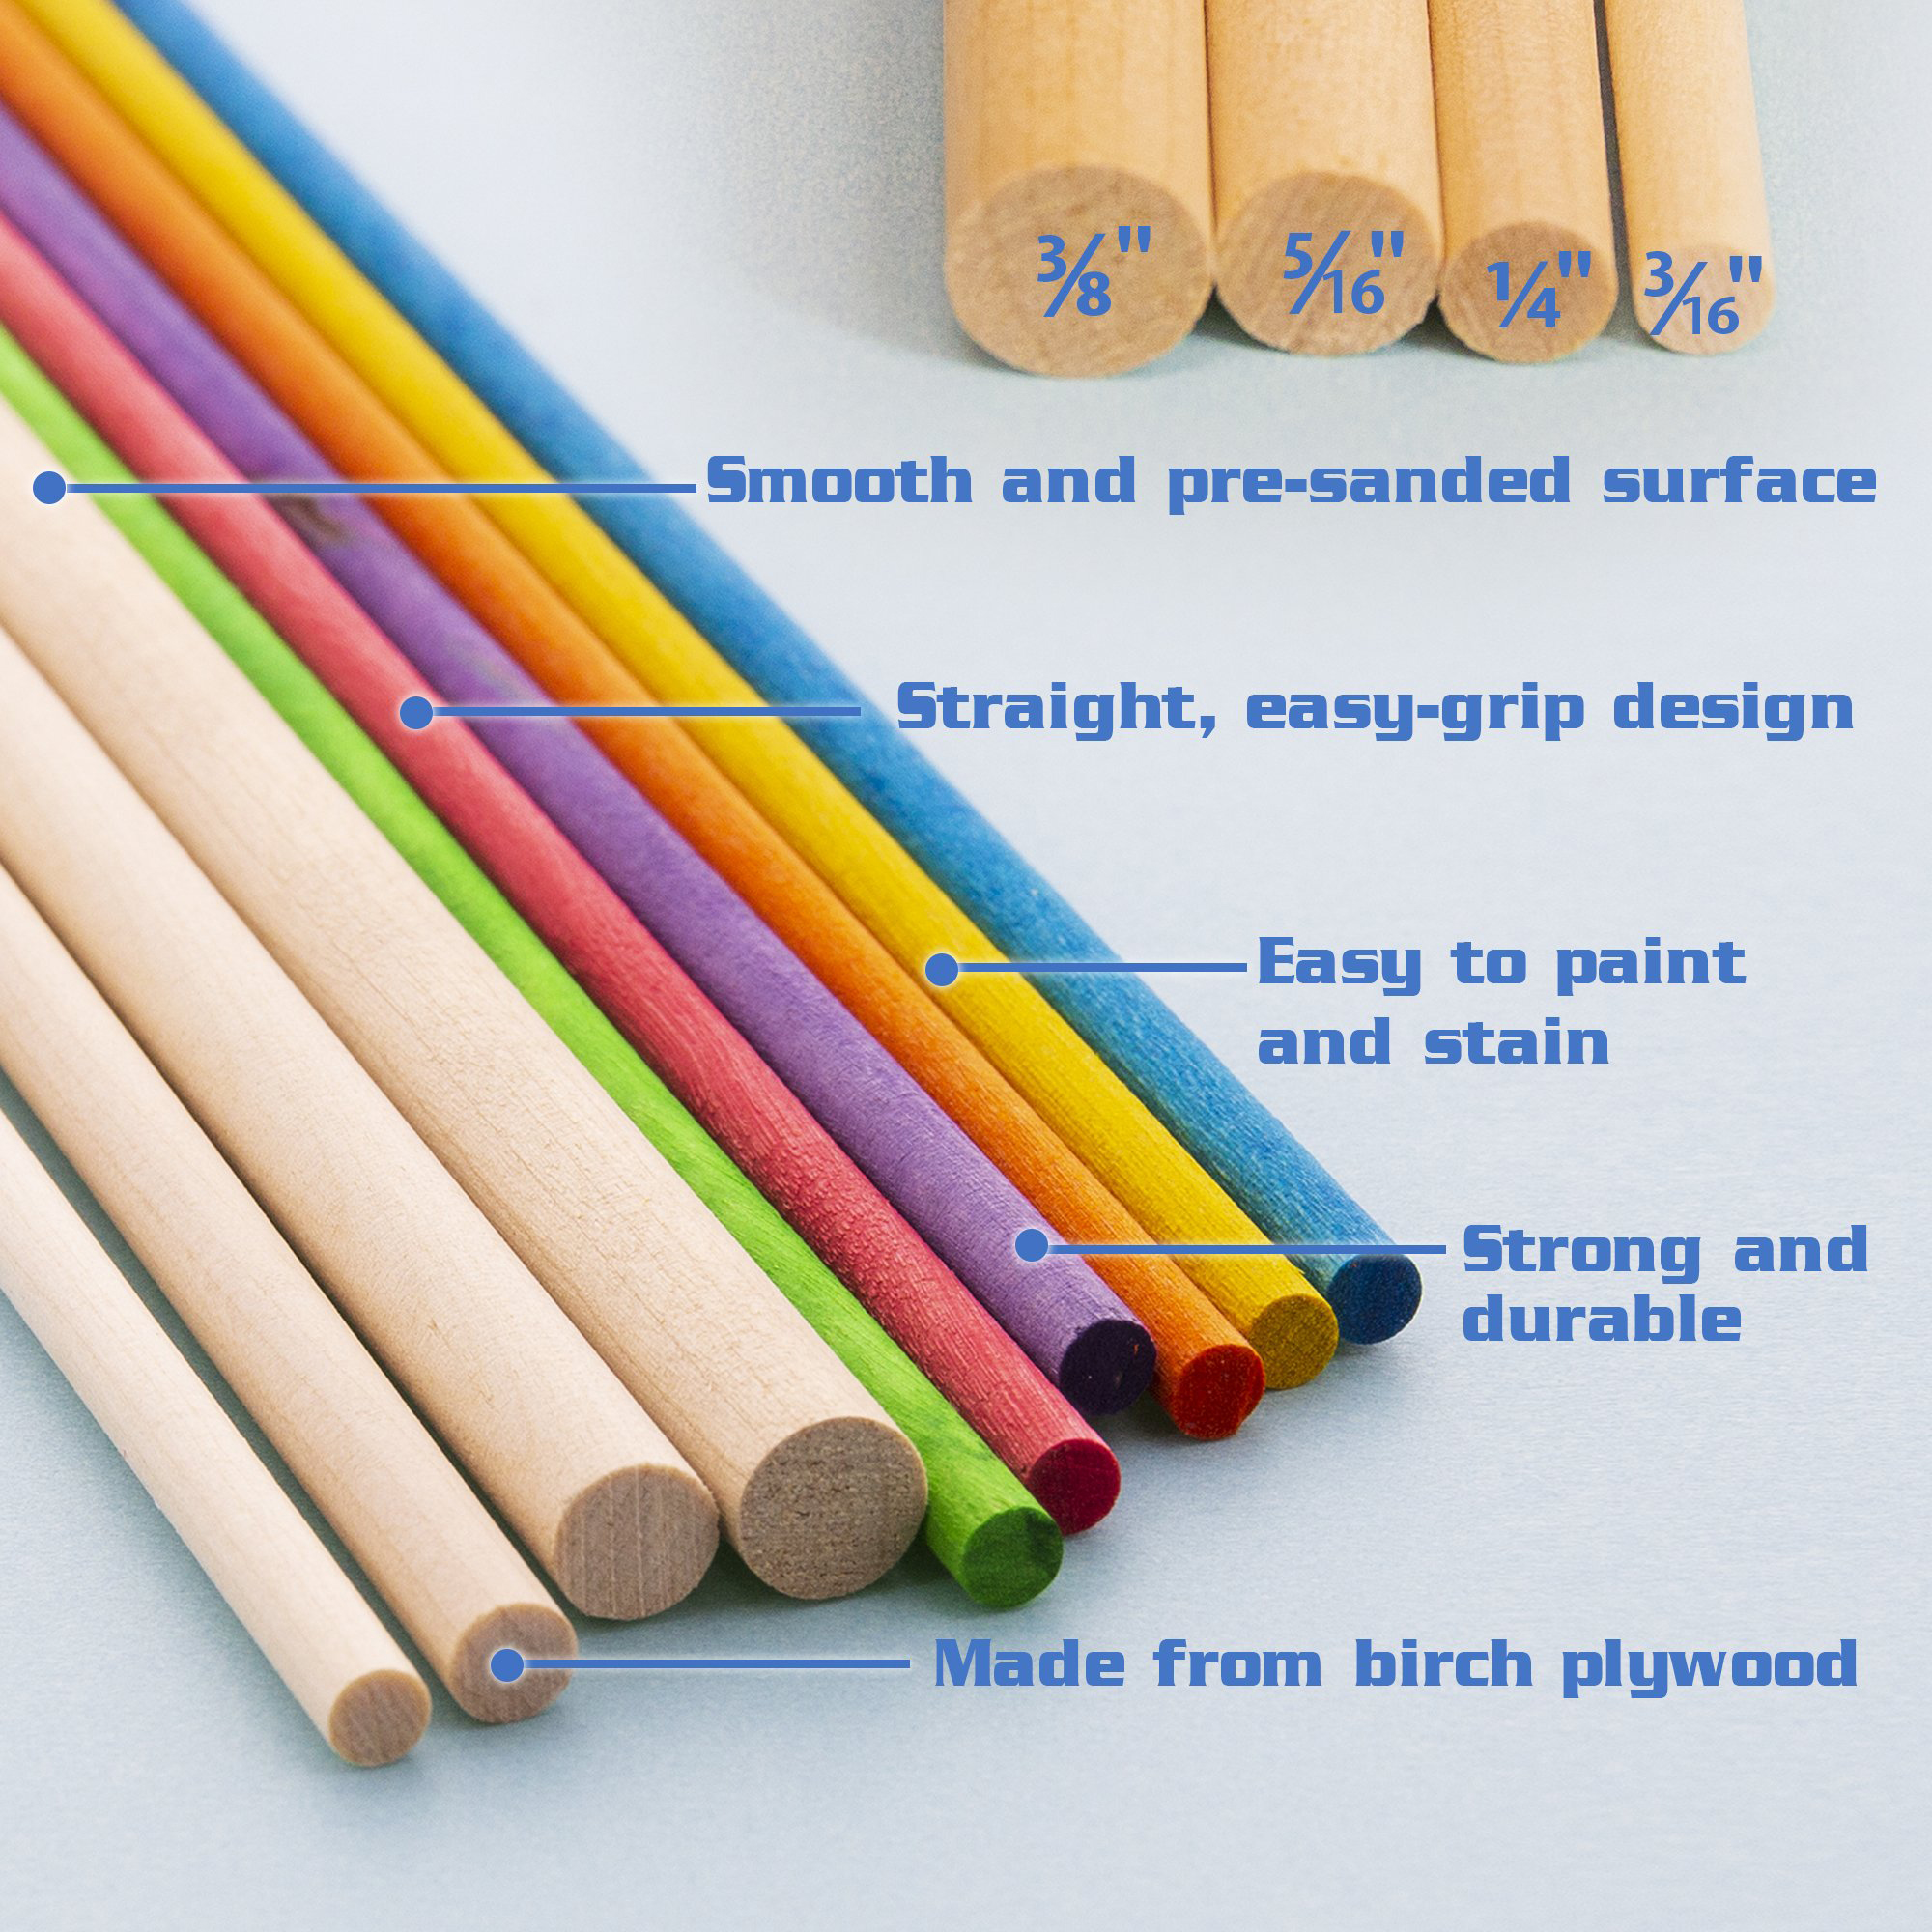 STEM Basics: People-Shaped Craft Sticks - 50 Count - TCR20951